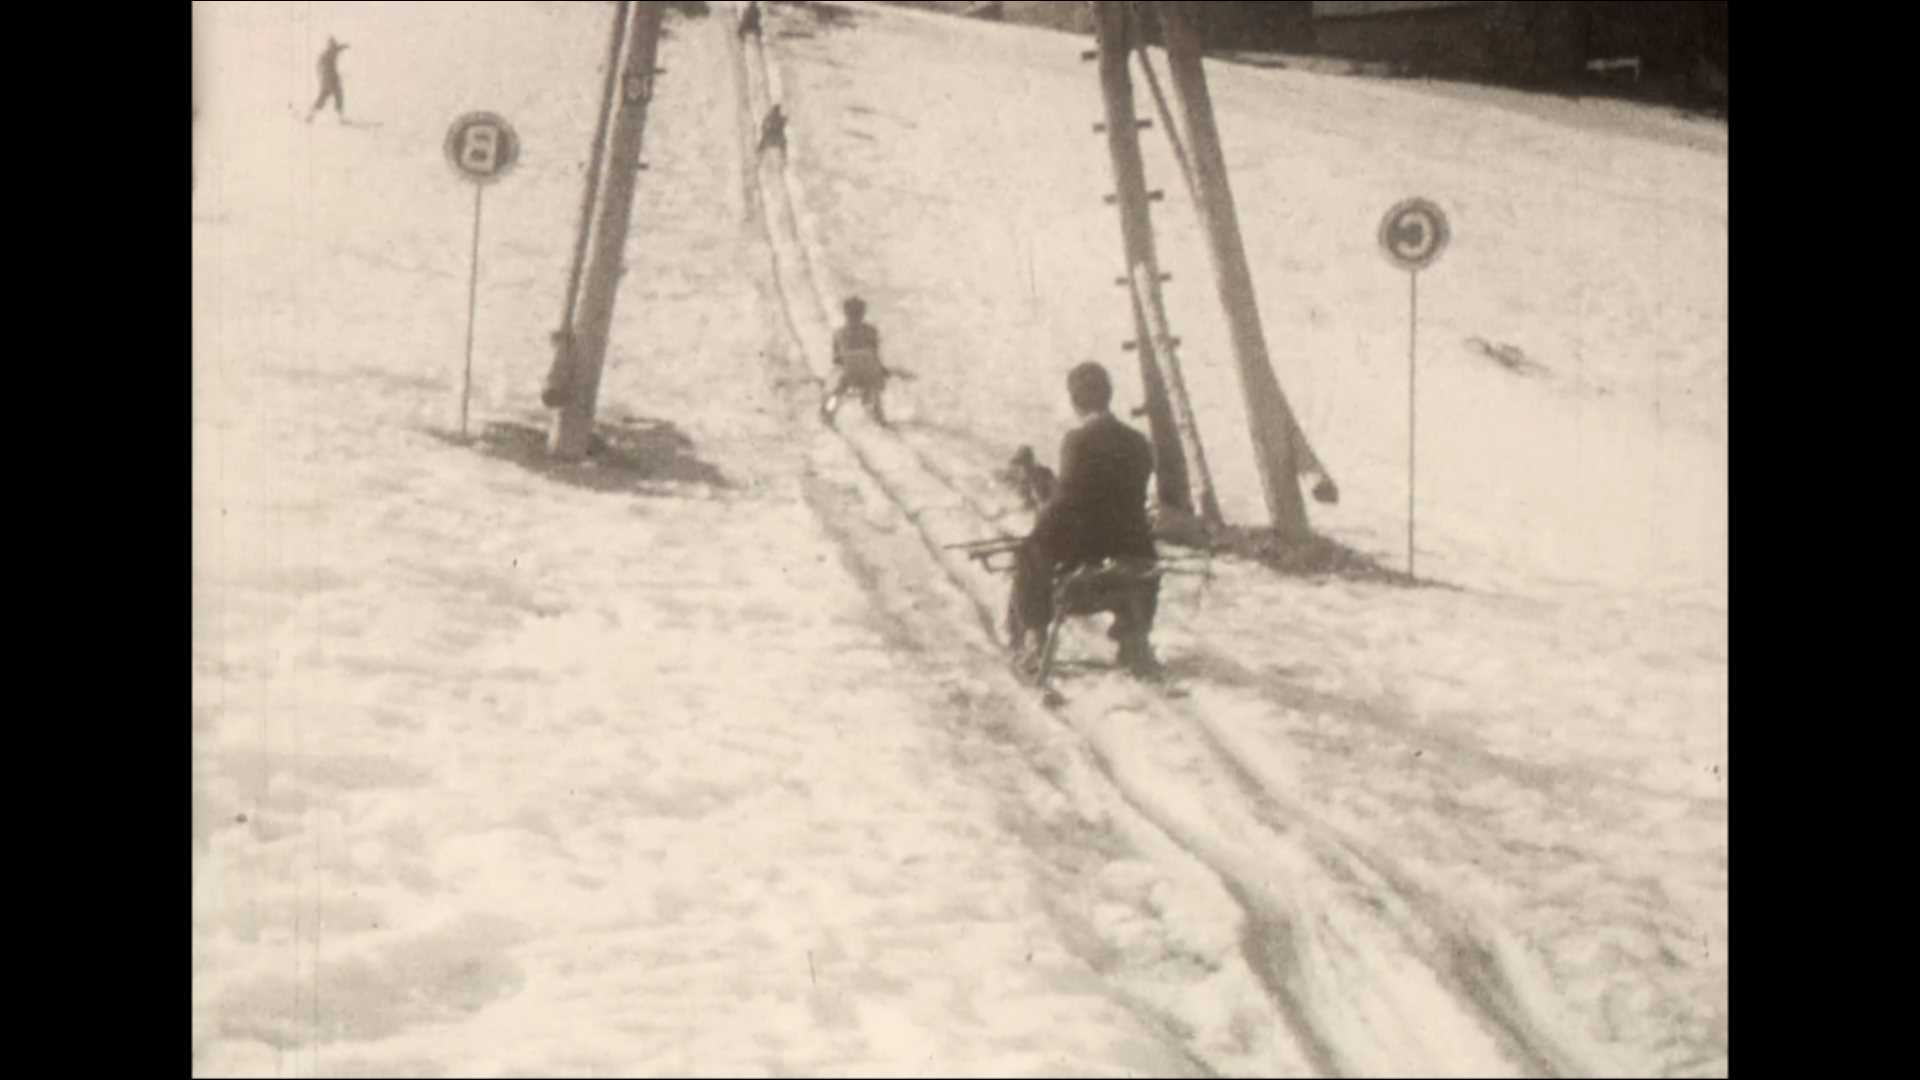 Henri au ski 2